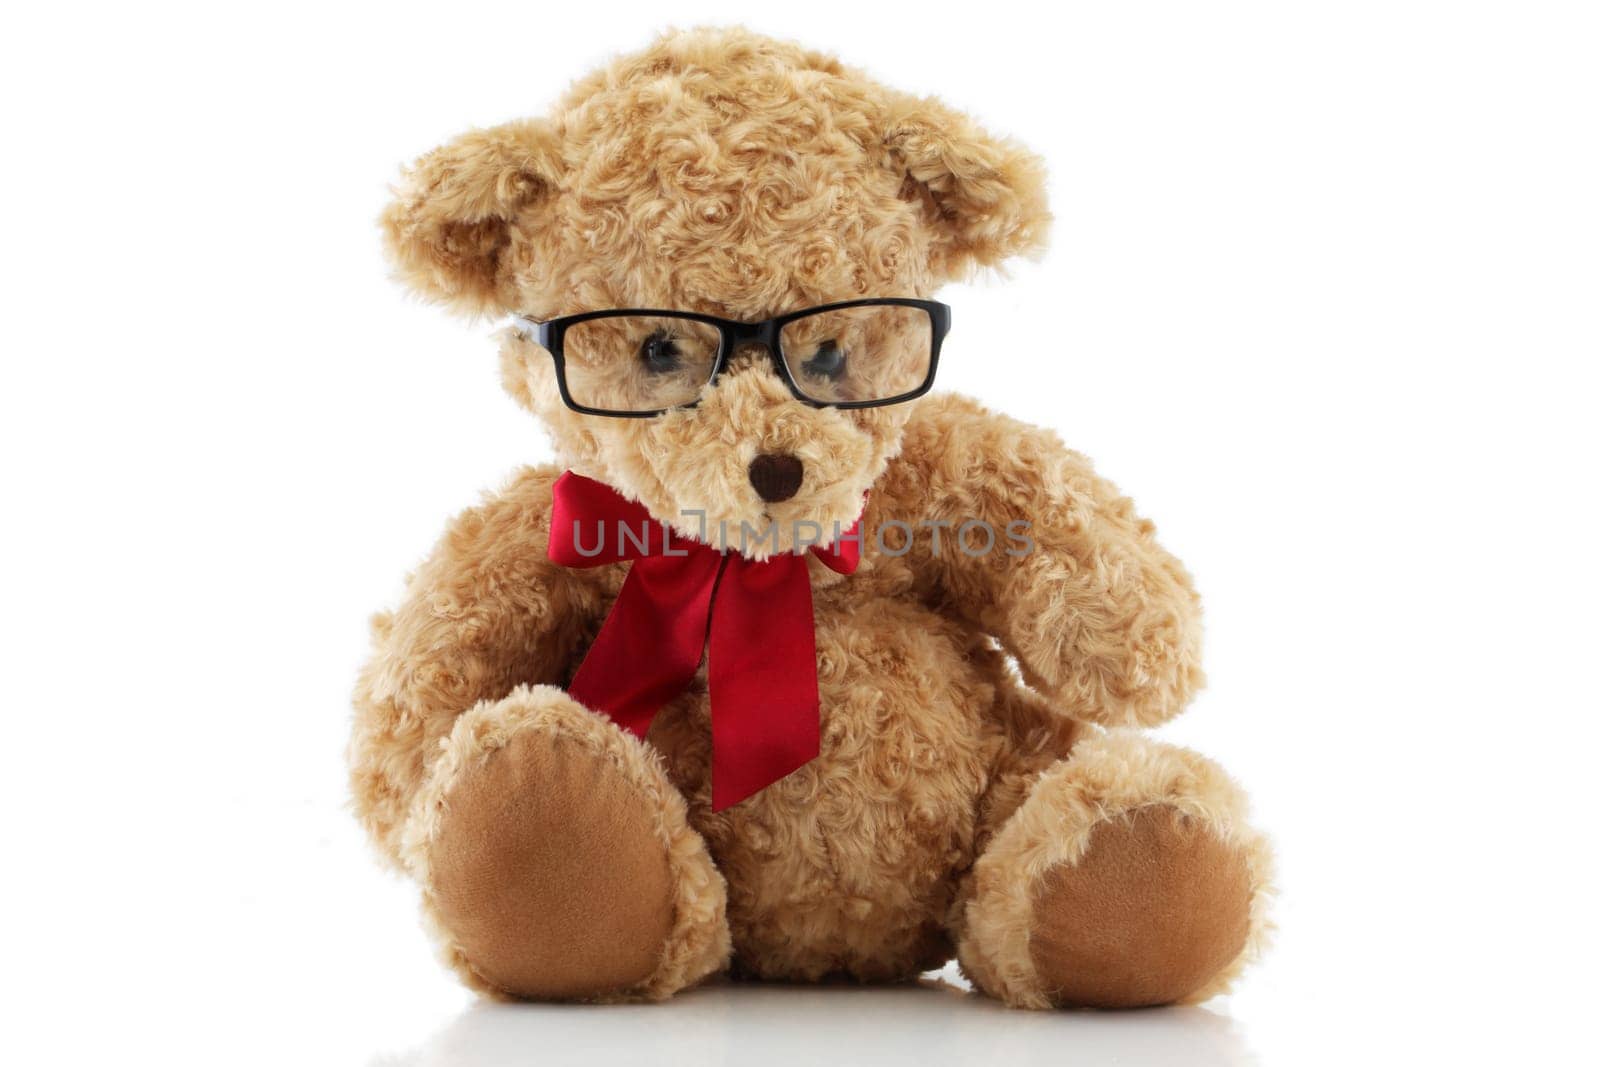 A Cute Teddy Bear with glasses